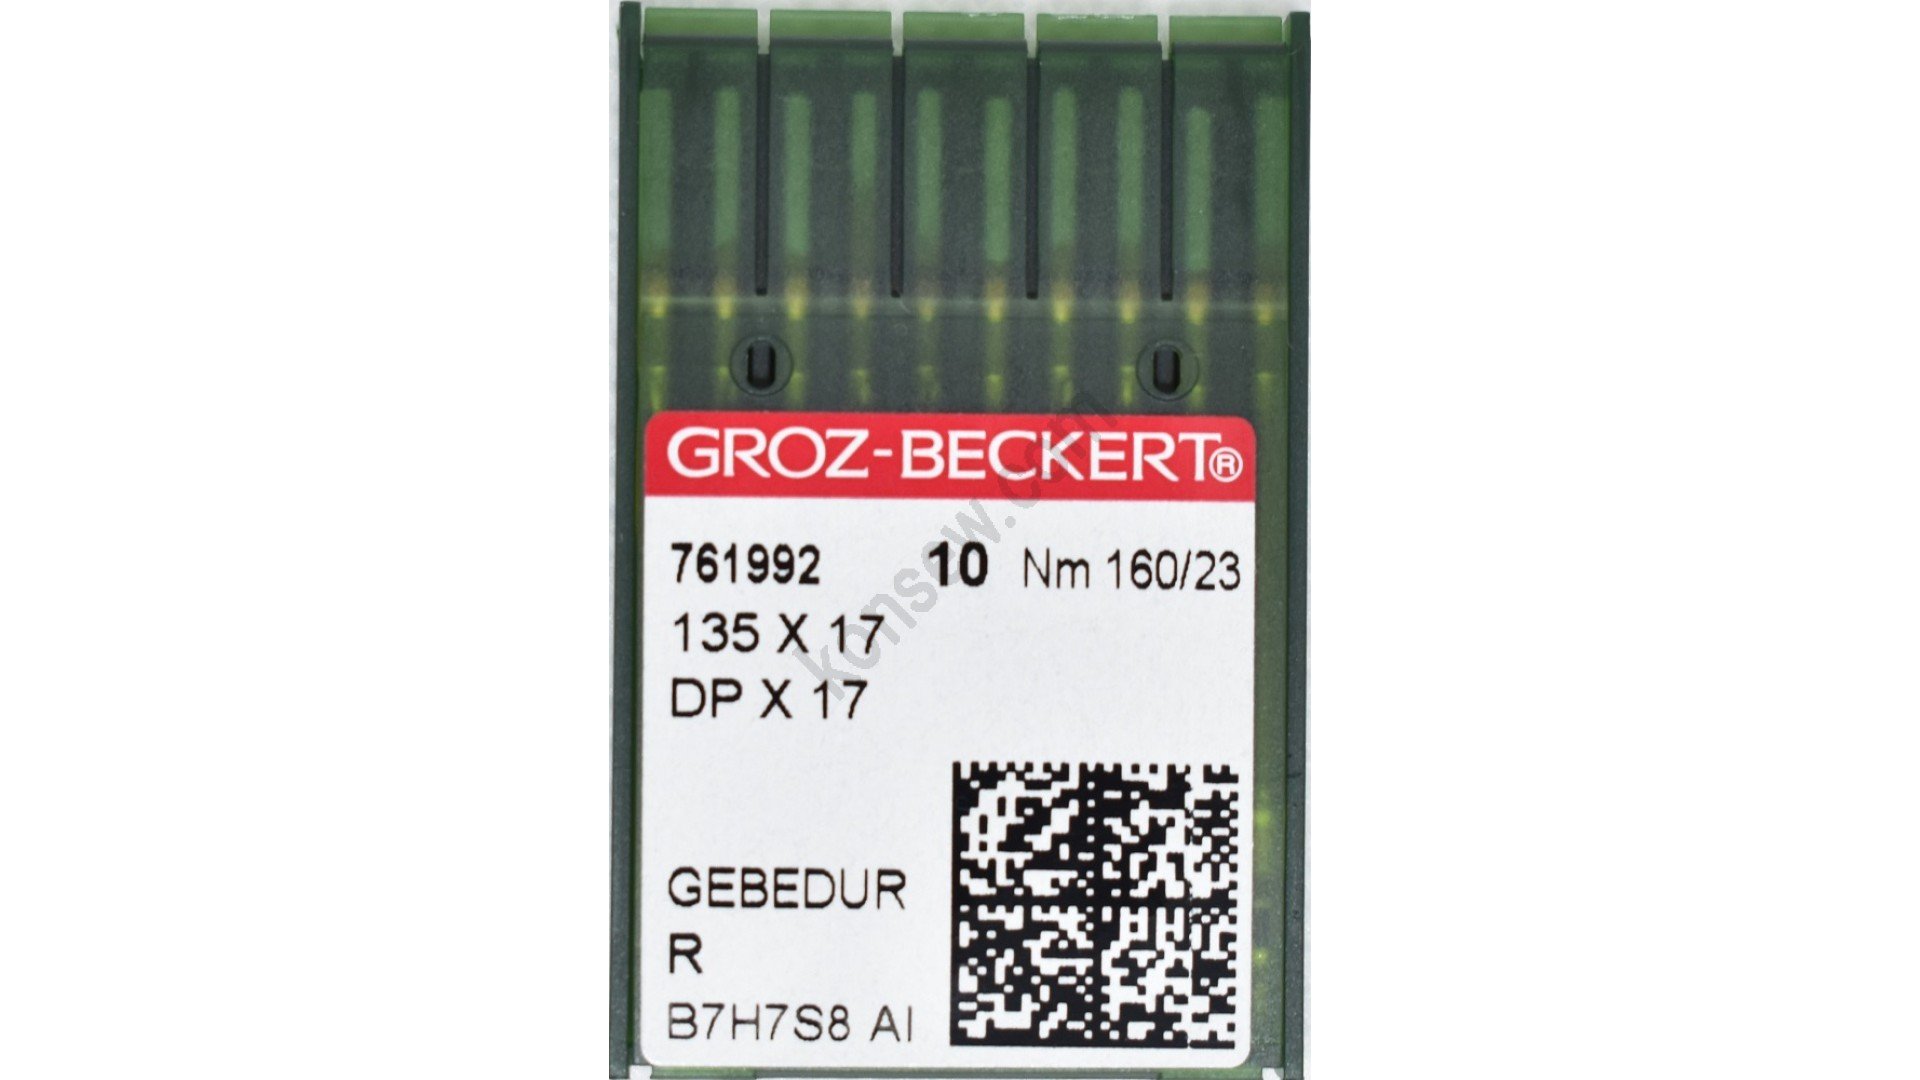 Groz-Beckert Industrial Sewing 10 Needles DPx17 135x17 size 120/19 